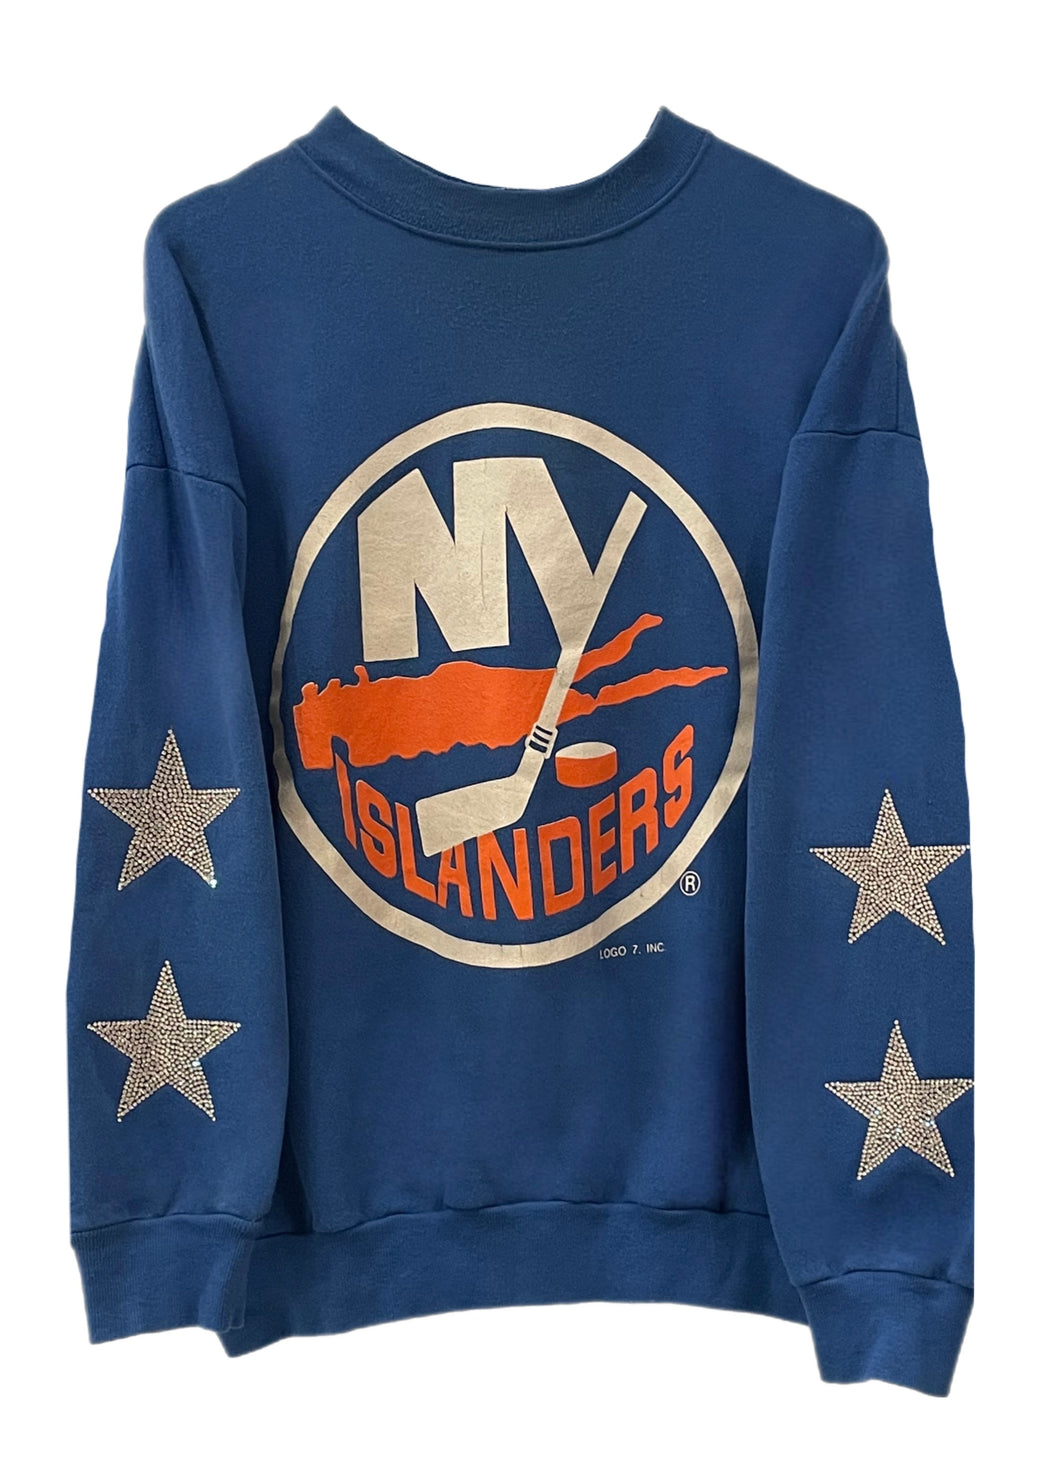 NY Islanders, NHL One of a KIND Vintage Sweatshirt with Crystal Star Design